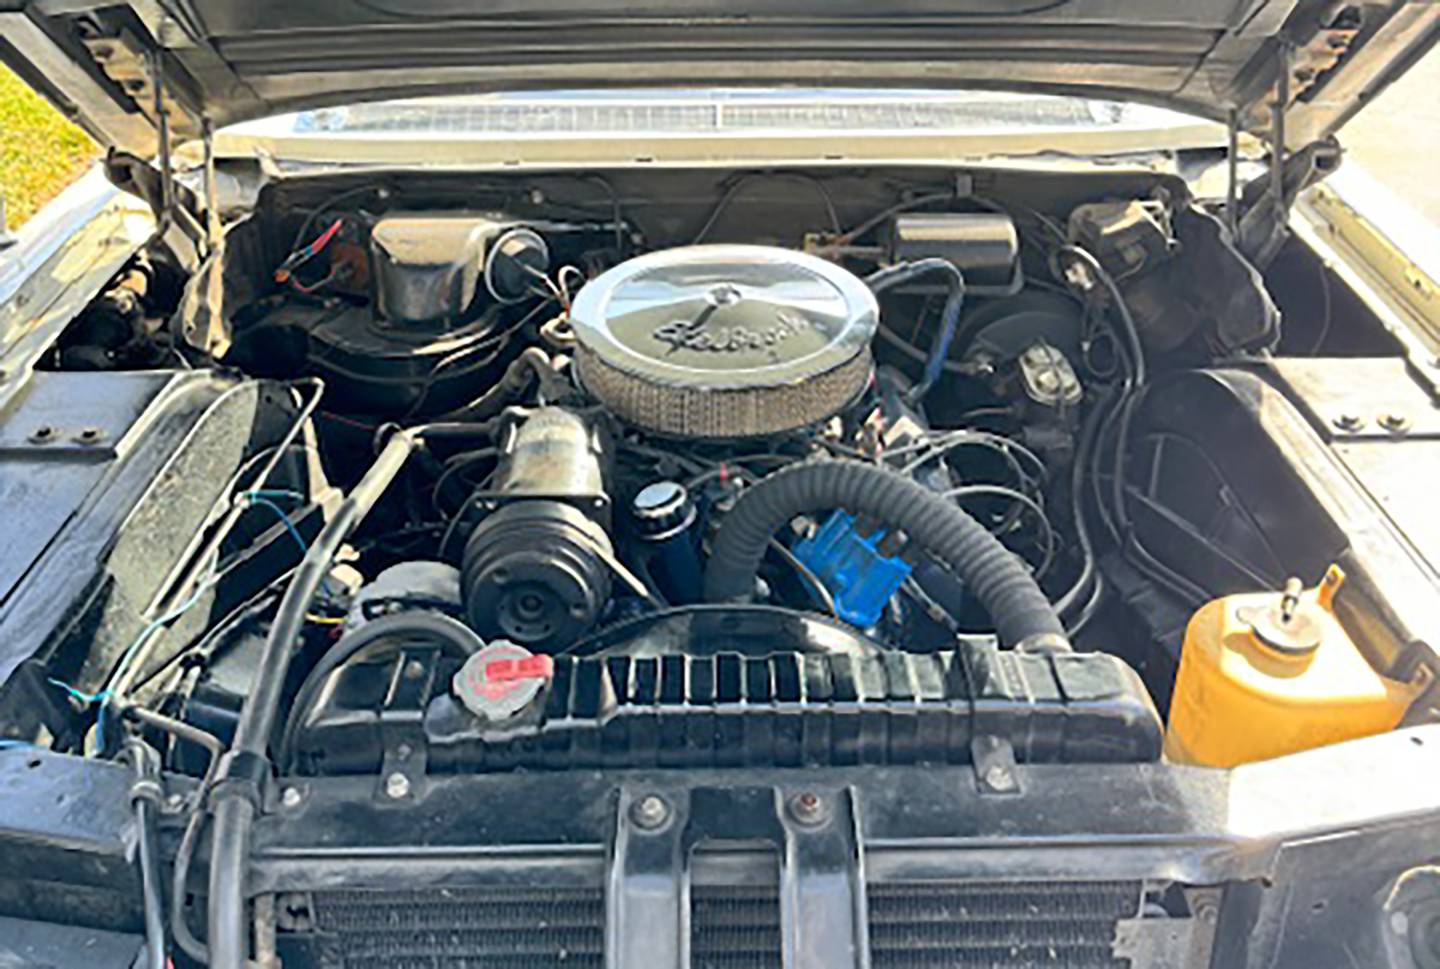 Photos by Rudy Host, Jr. - 1964 Cadillac Coupe De Ville Engine